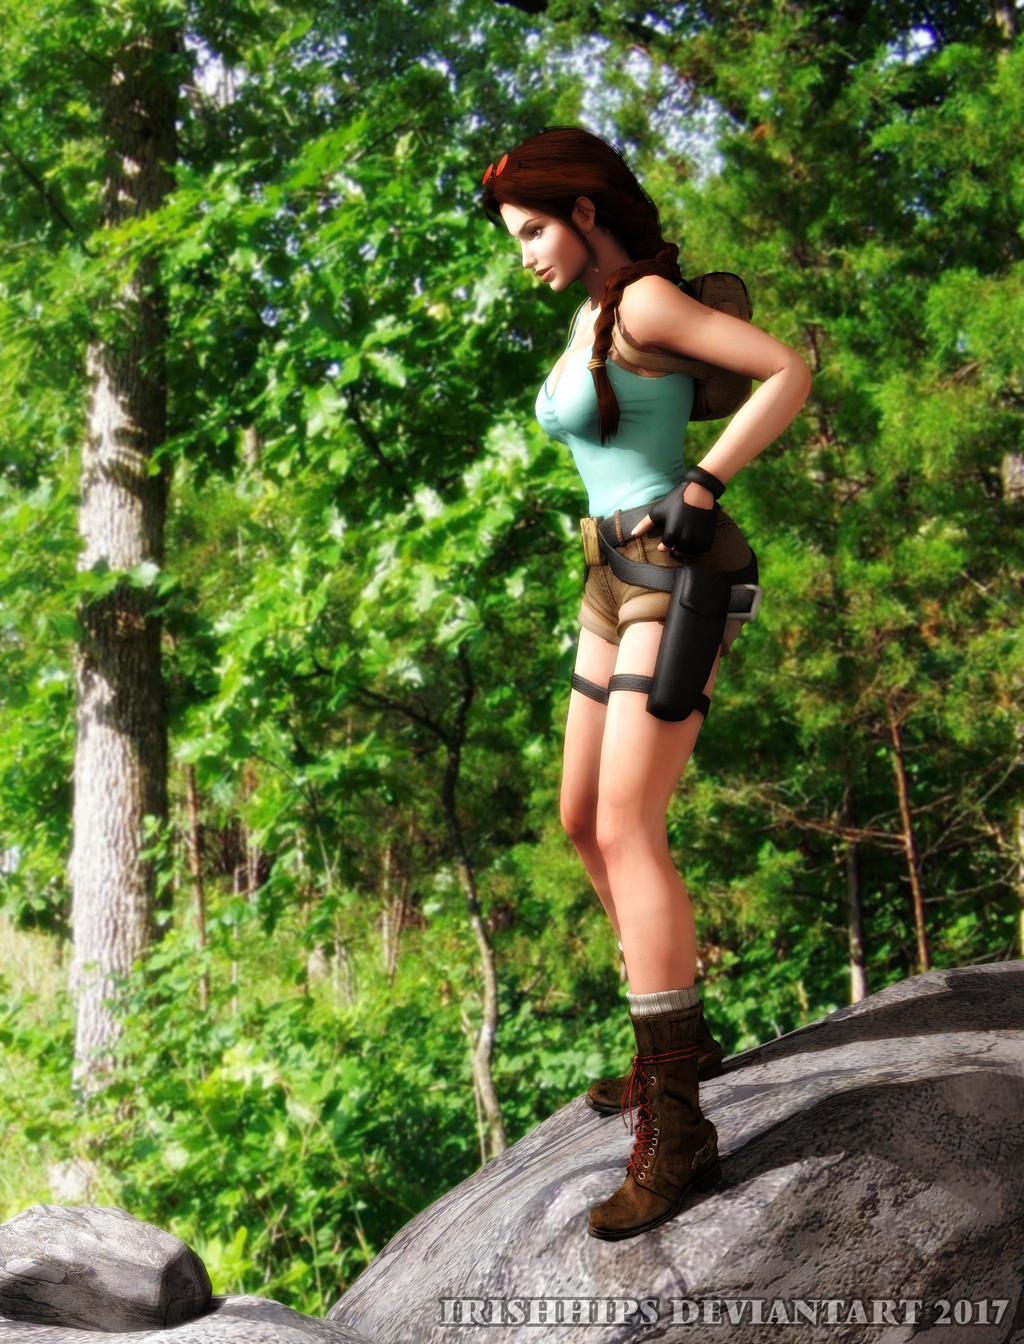 Tomb Raider: A Curious Lara